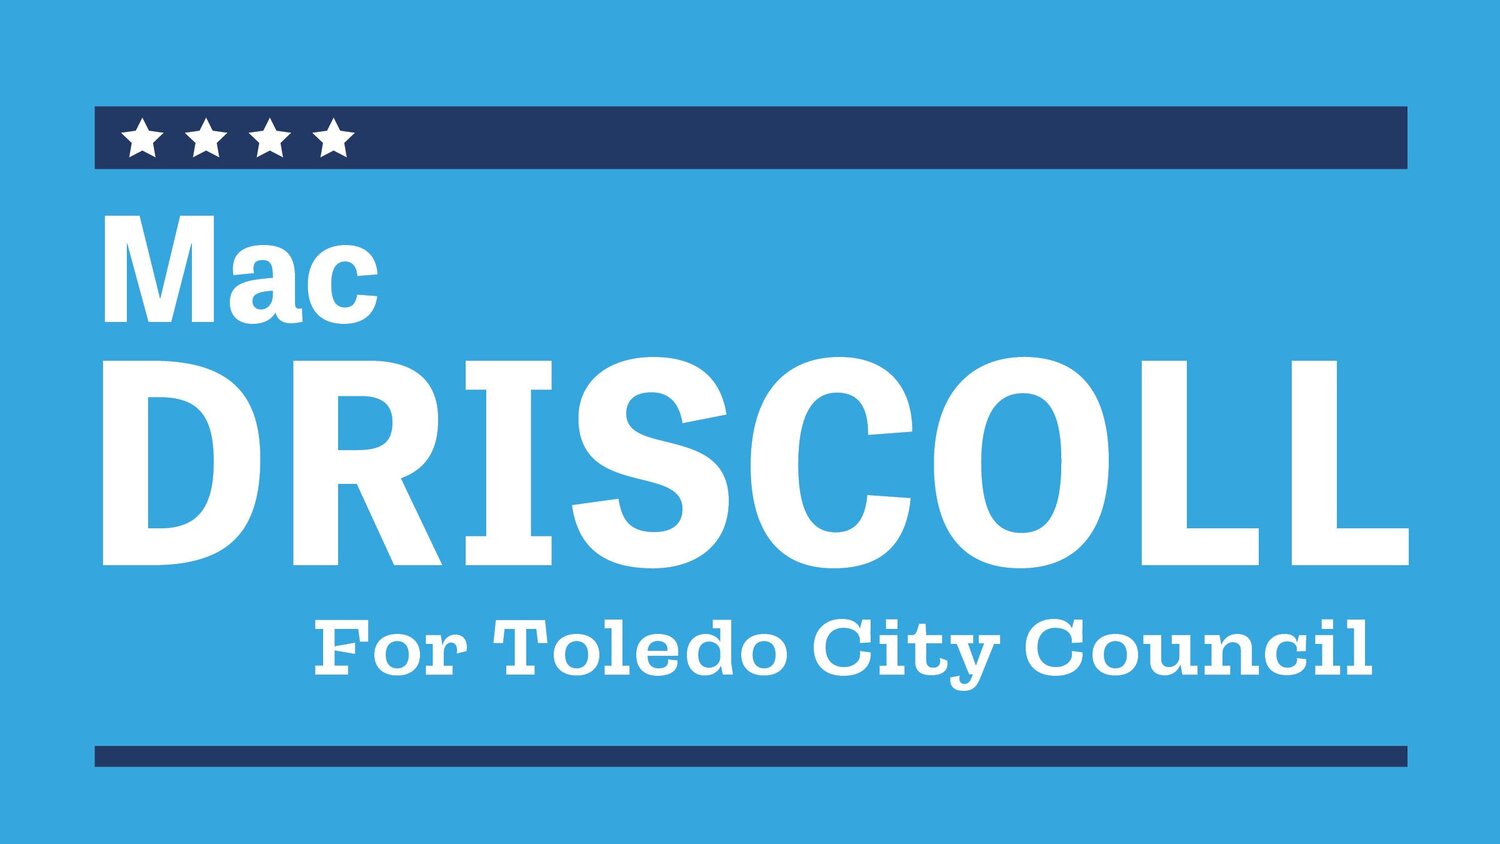 Mac Driscoll for Toledo City Council